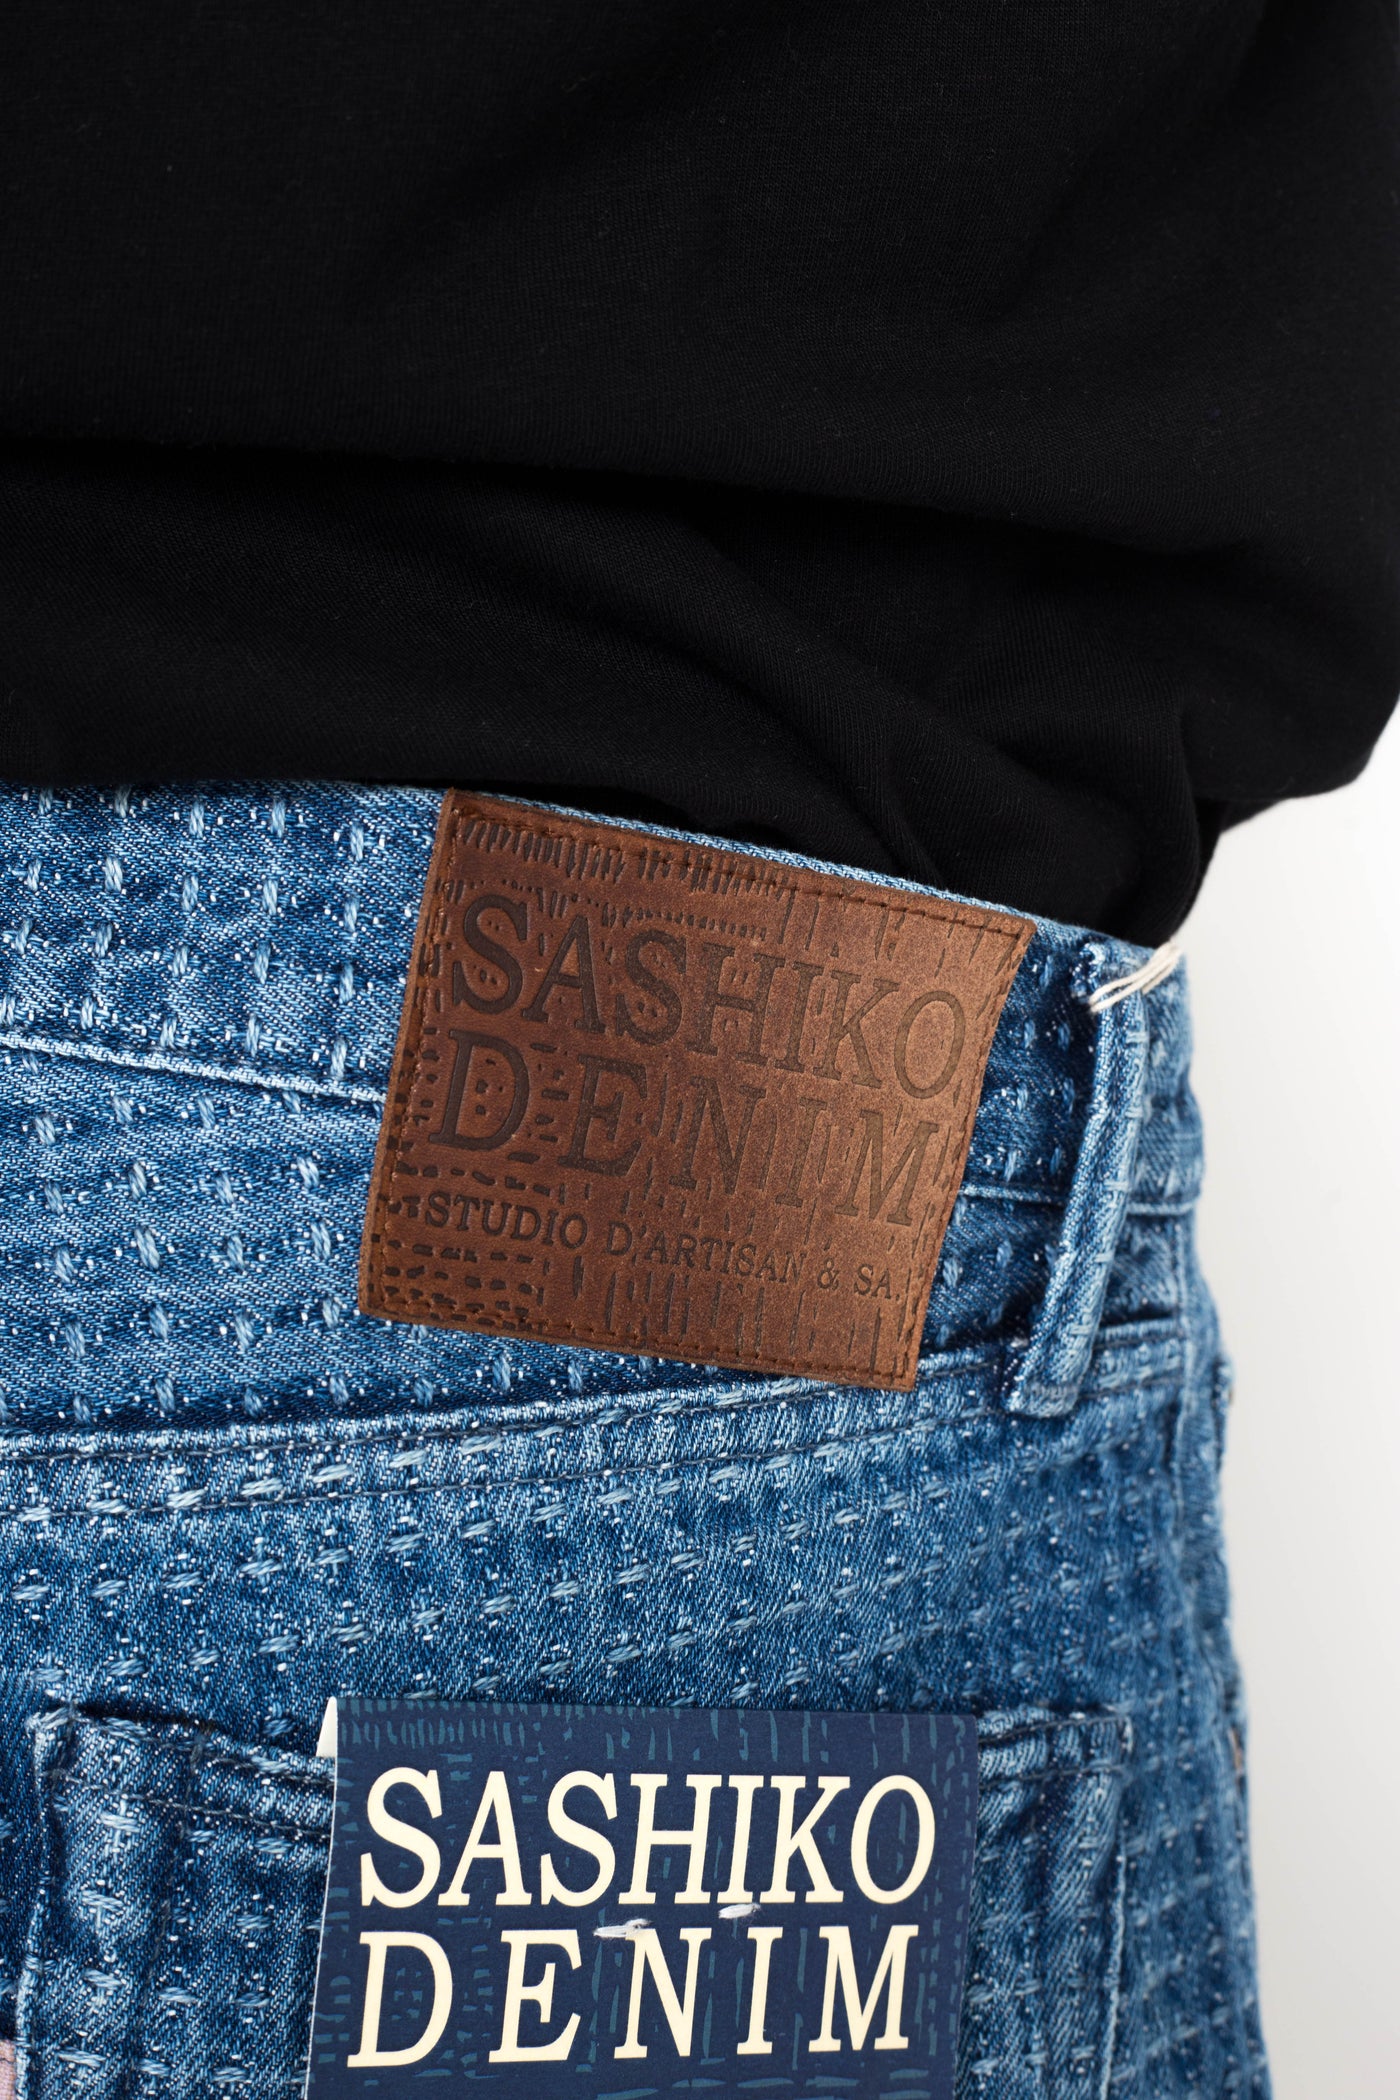 D1855US Sashiko BORO Denim Jeans - Used Indigo